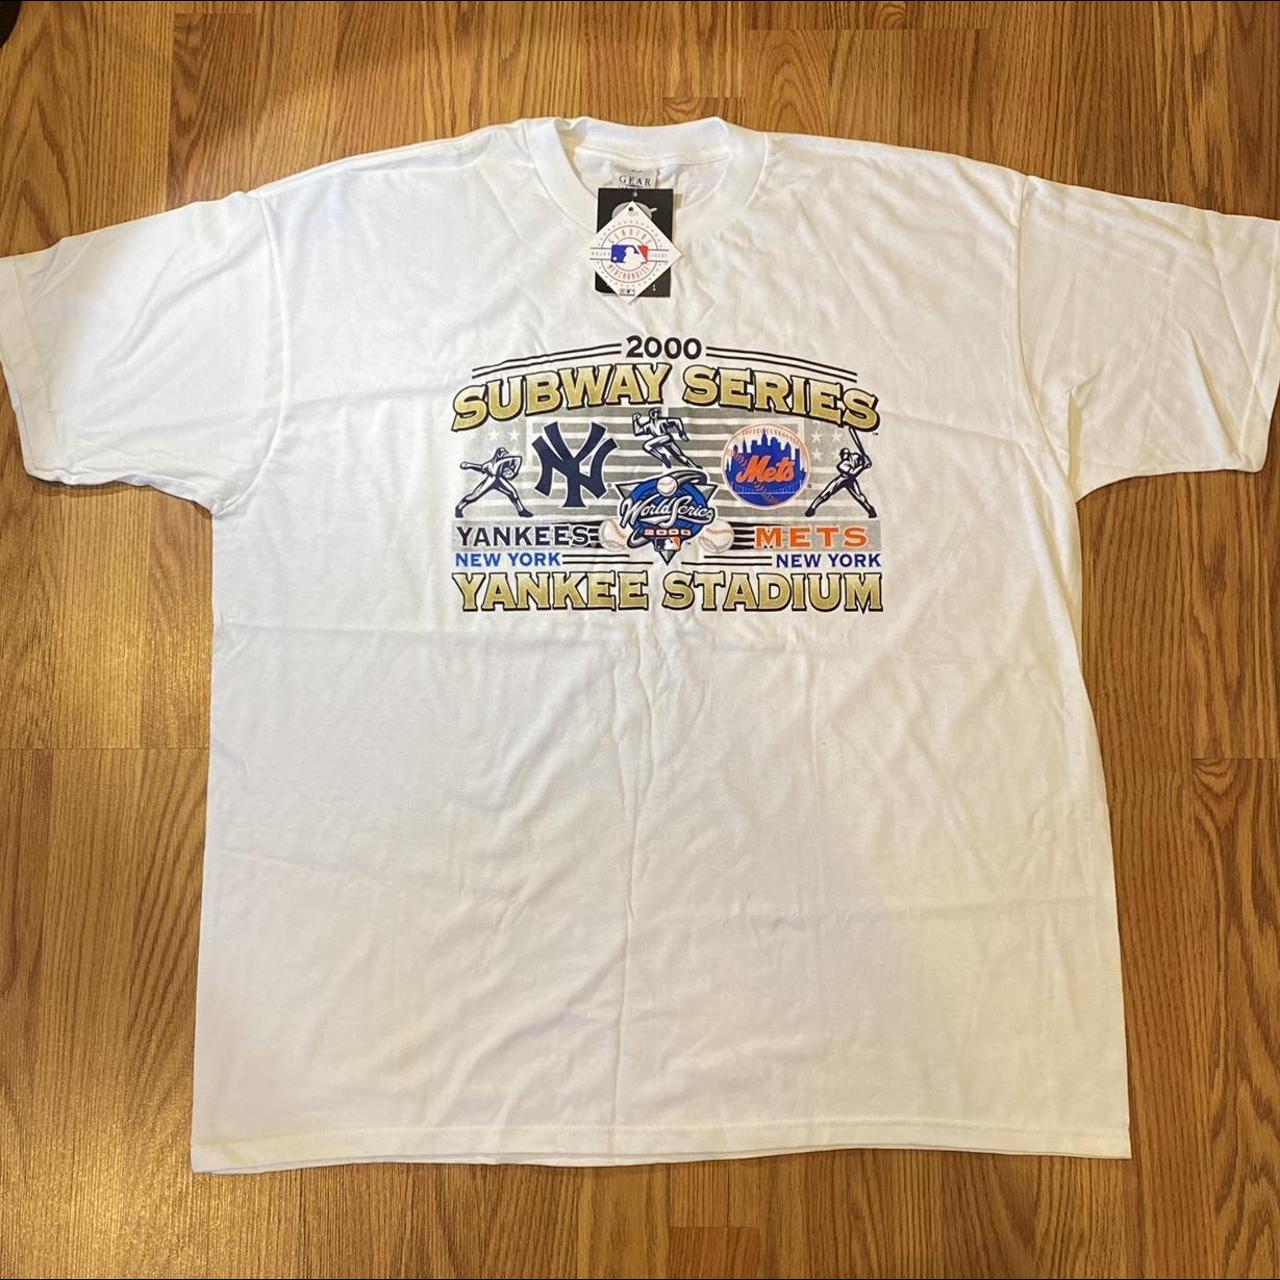 2000 subway series t-shirt. Yankees vs the Mets at... - Depop